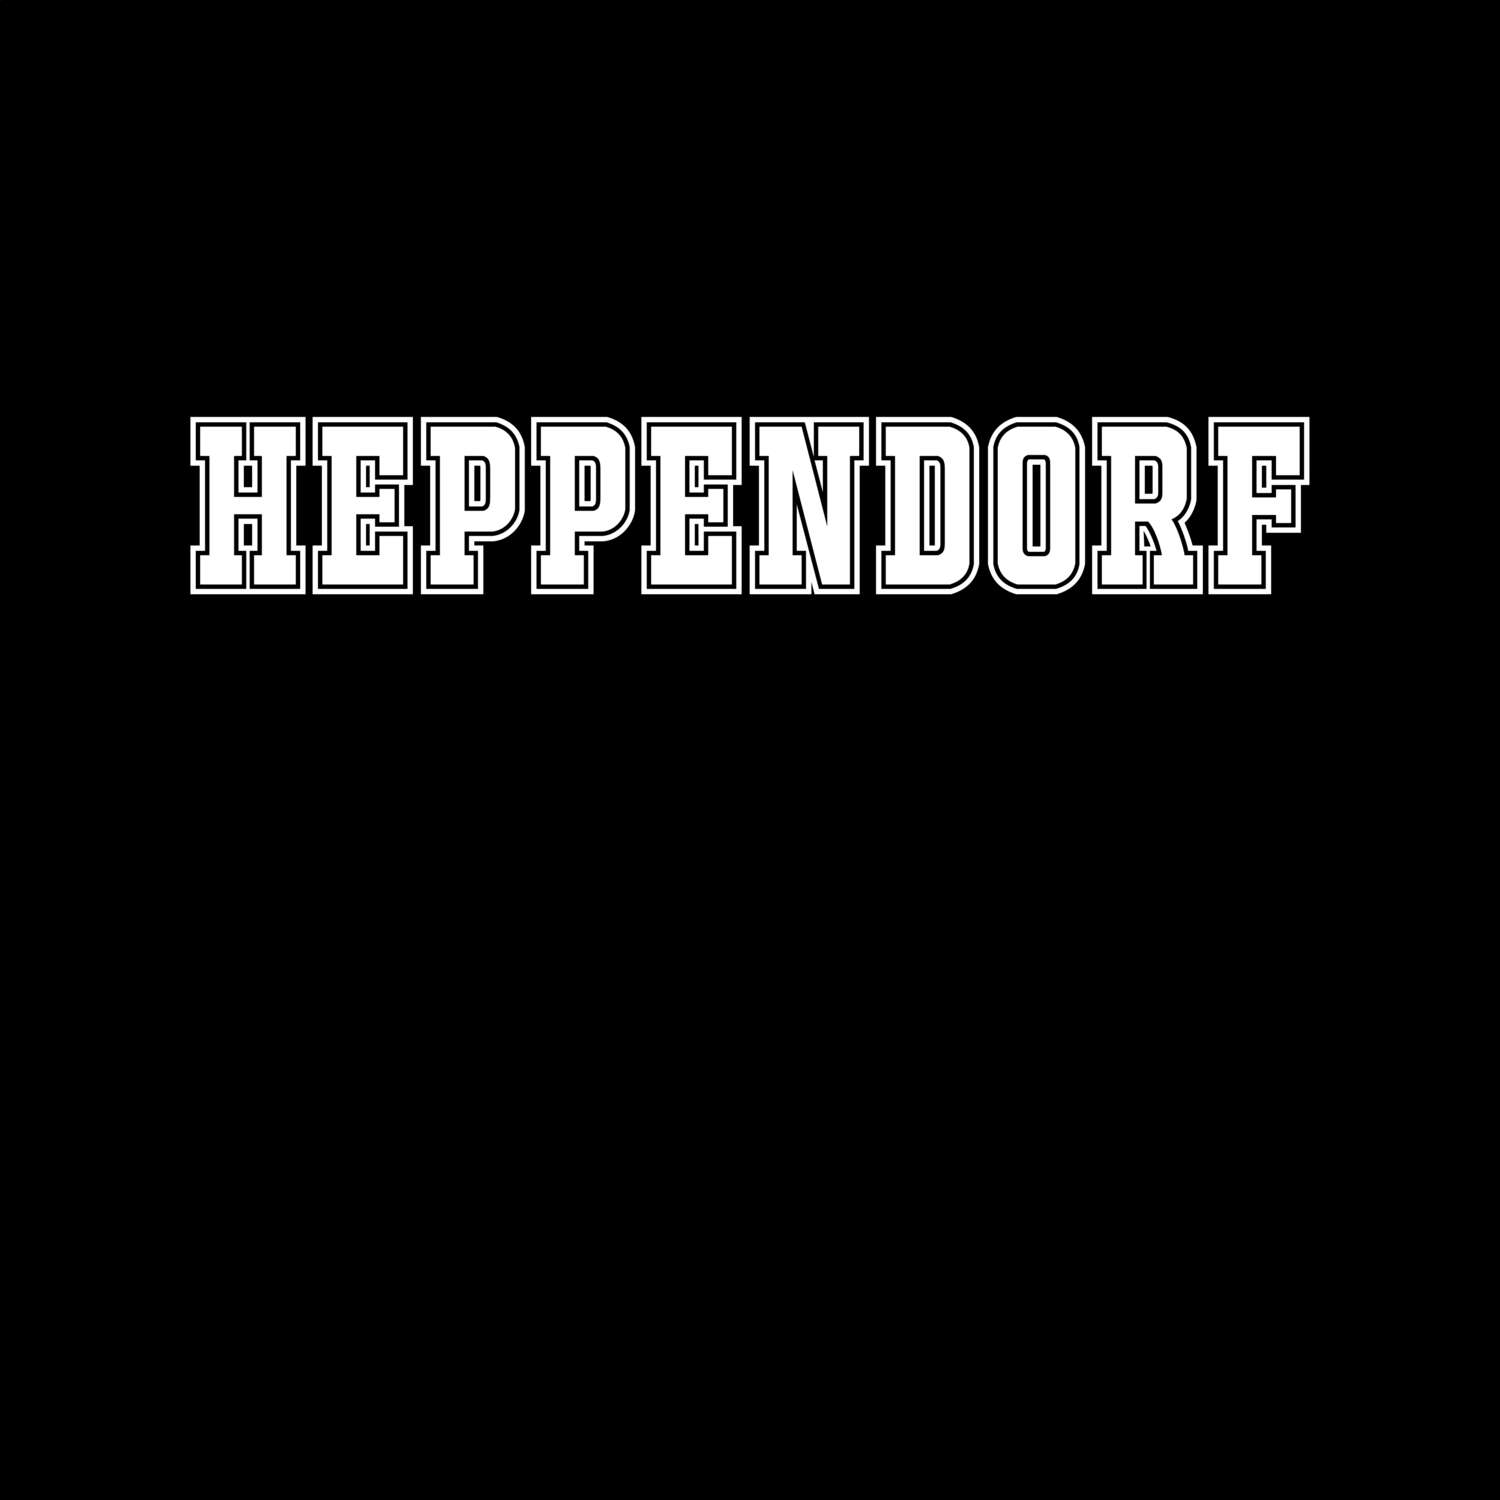 Heppendorf T-Shirt »Classic«